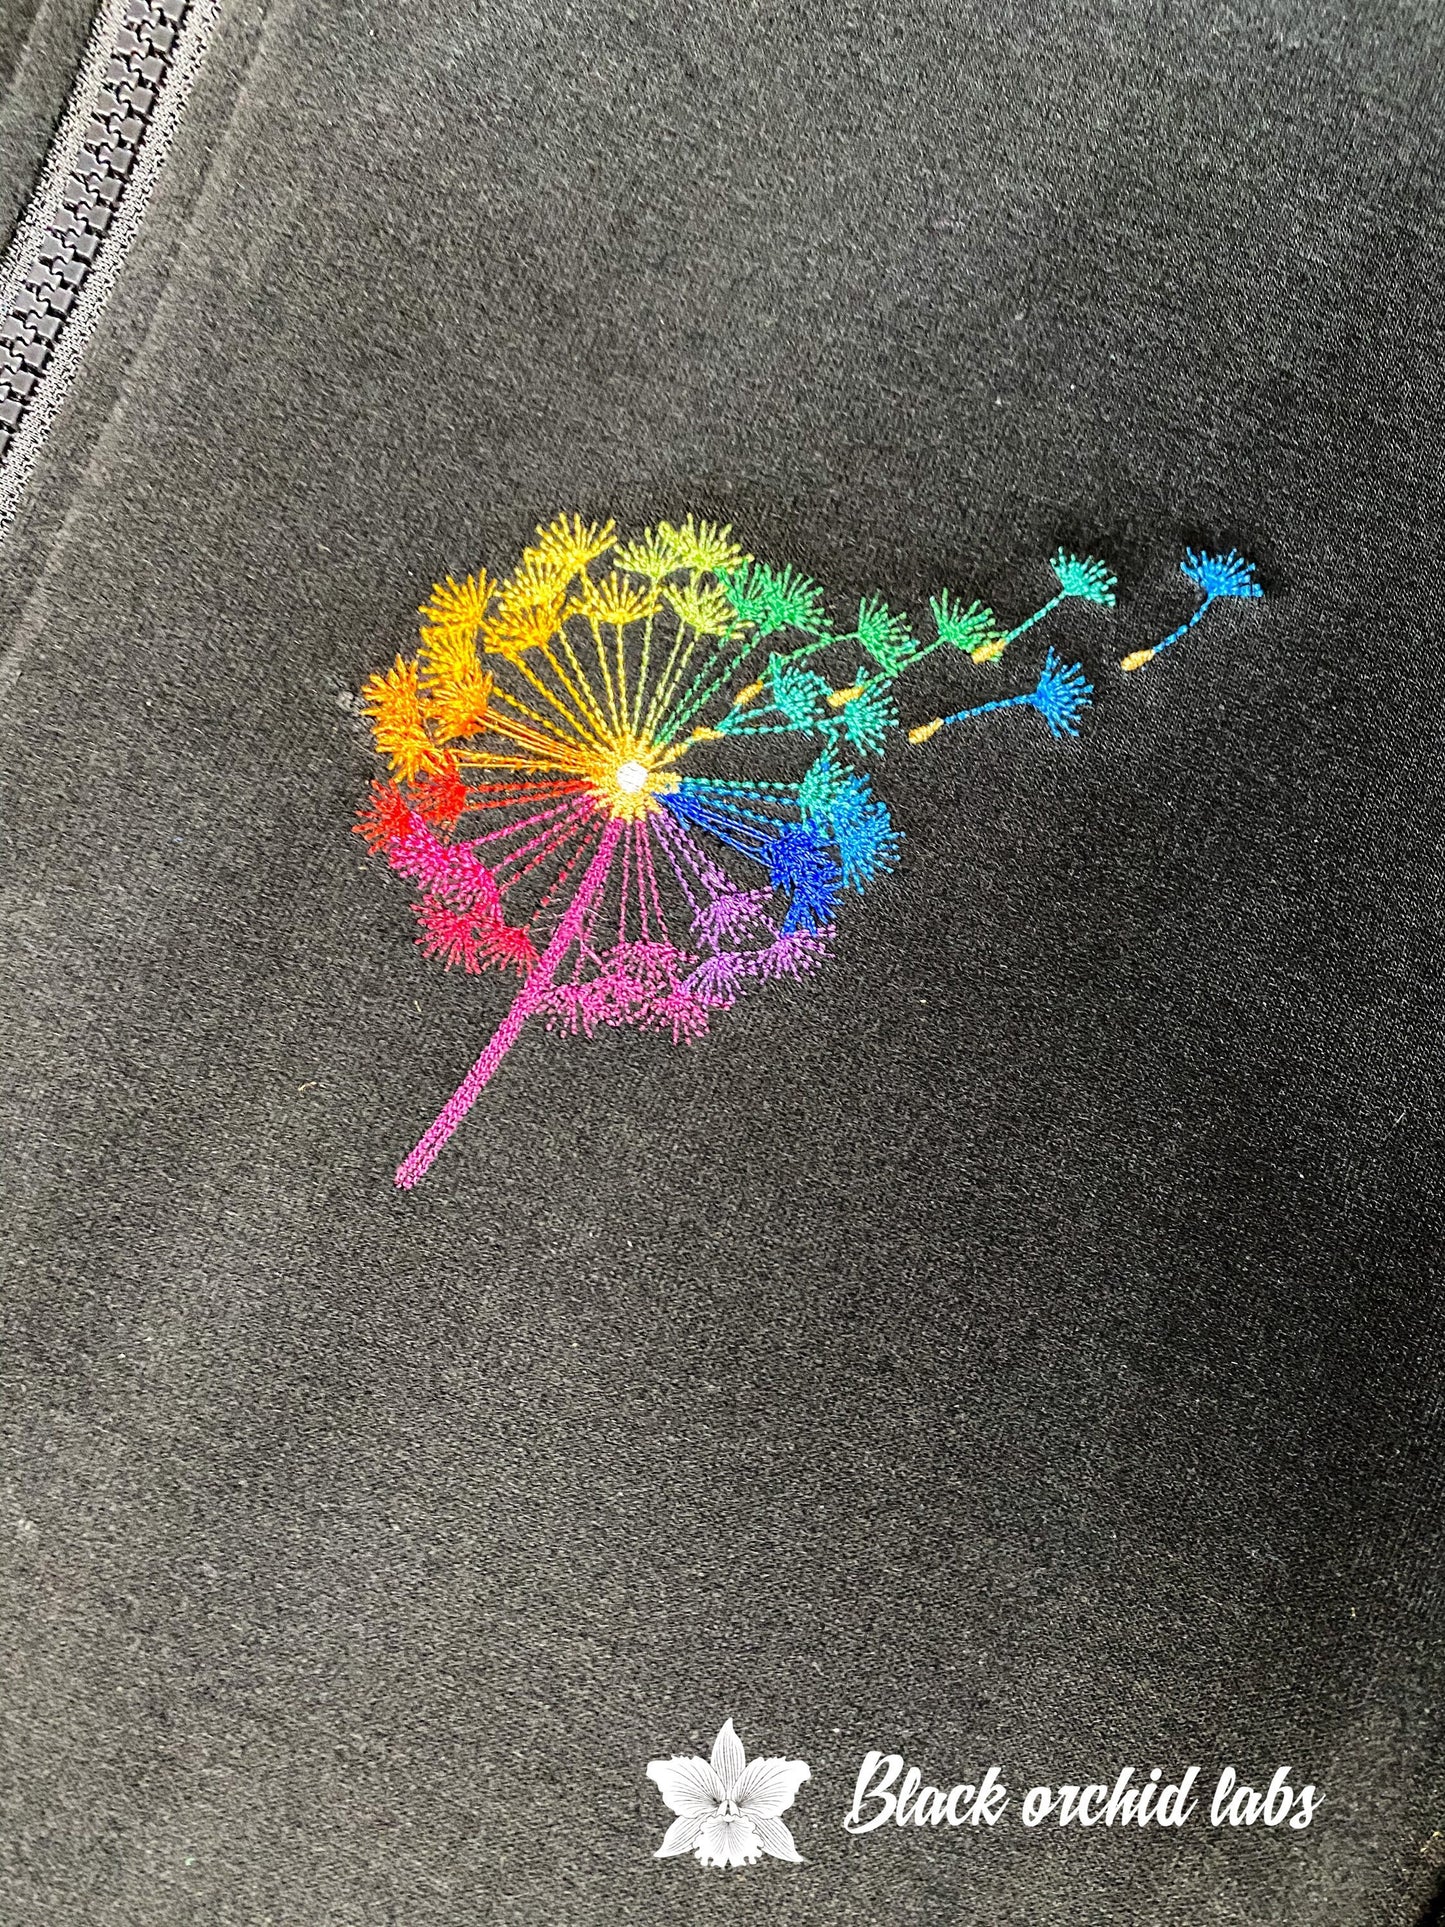 Rainbow Dandelion Embroidered Hoodie Zip front or Pullover, Ultra Soft, Dandelion Hoodie, Rainbow Sweatshirt